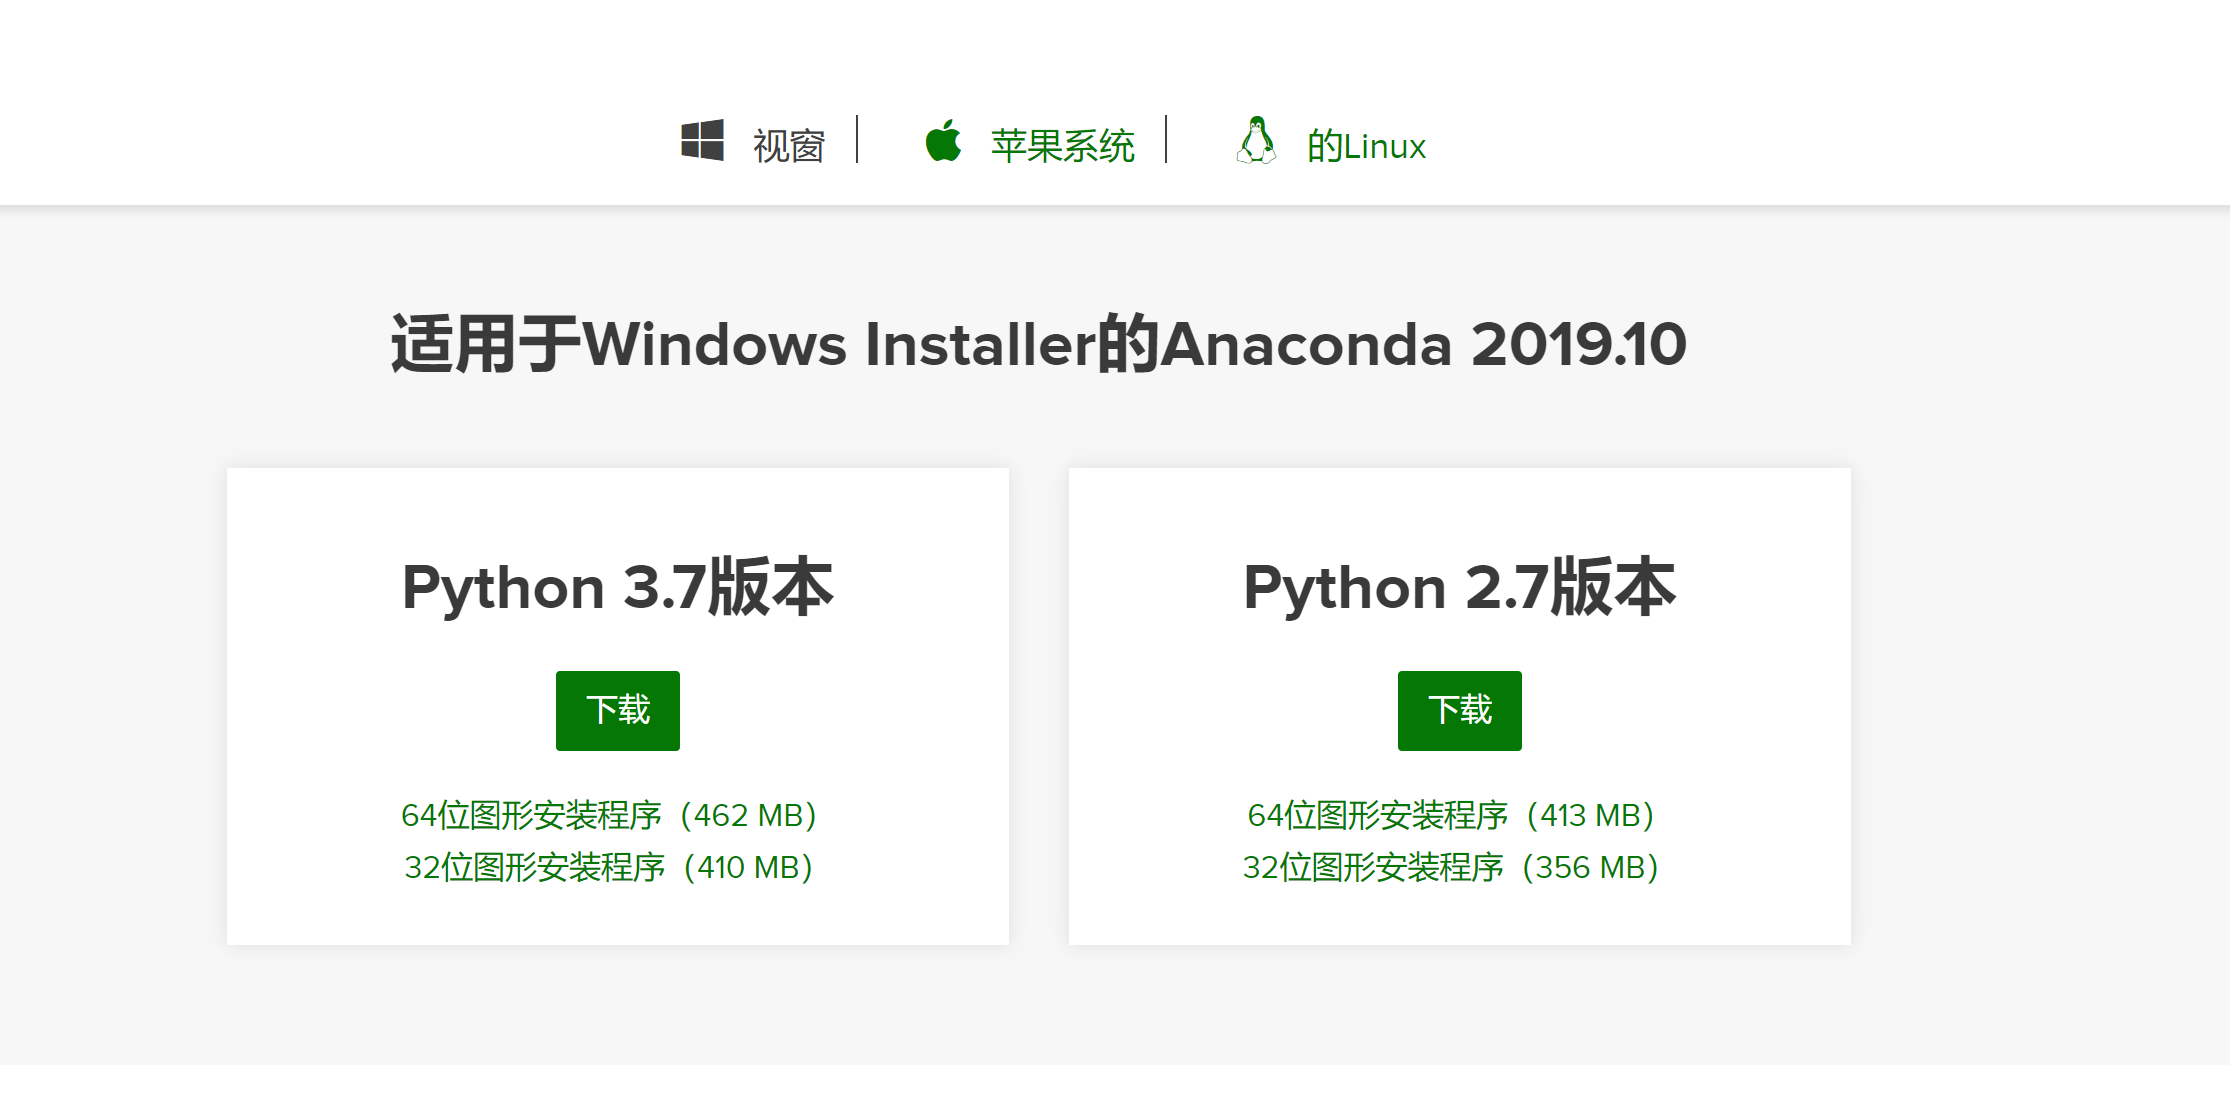 anaconda 2 comes with ipython